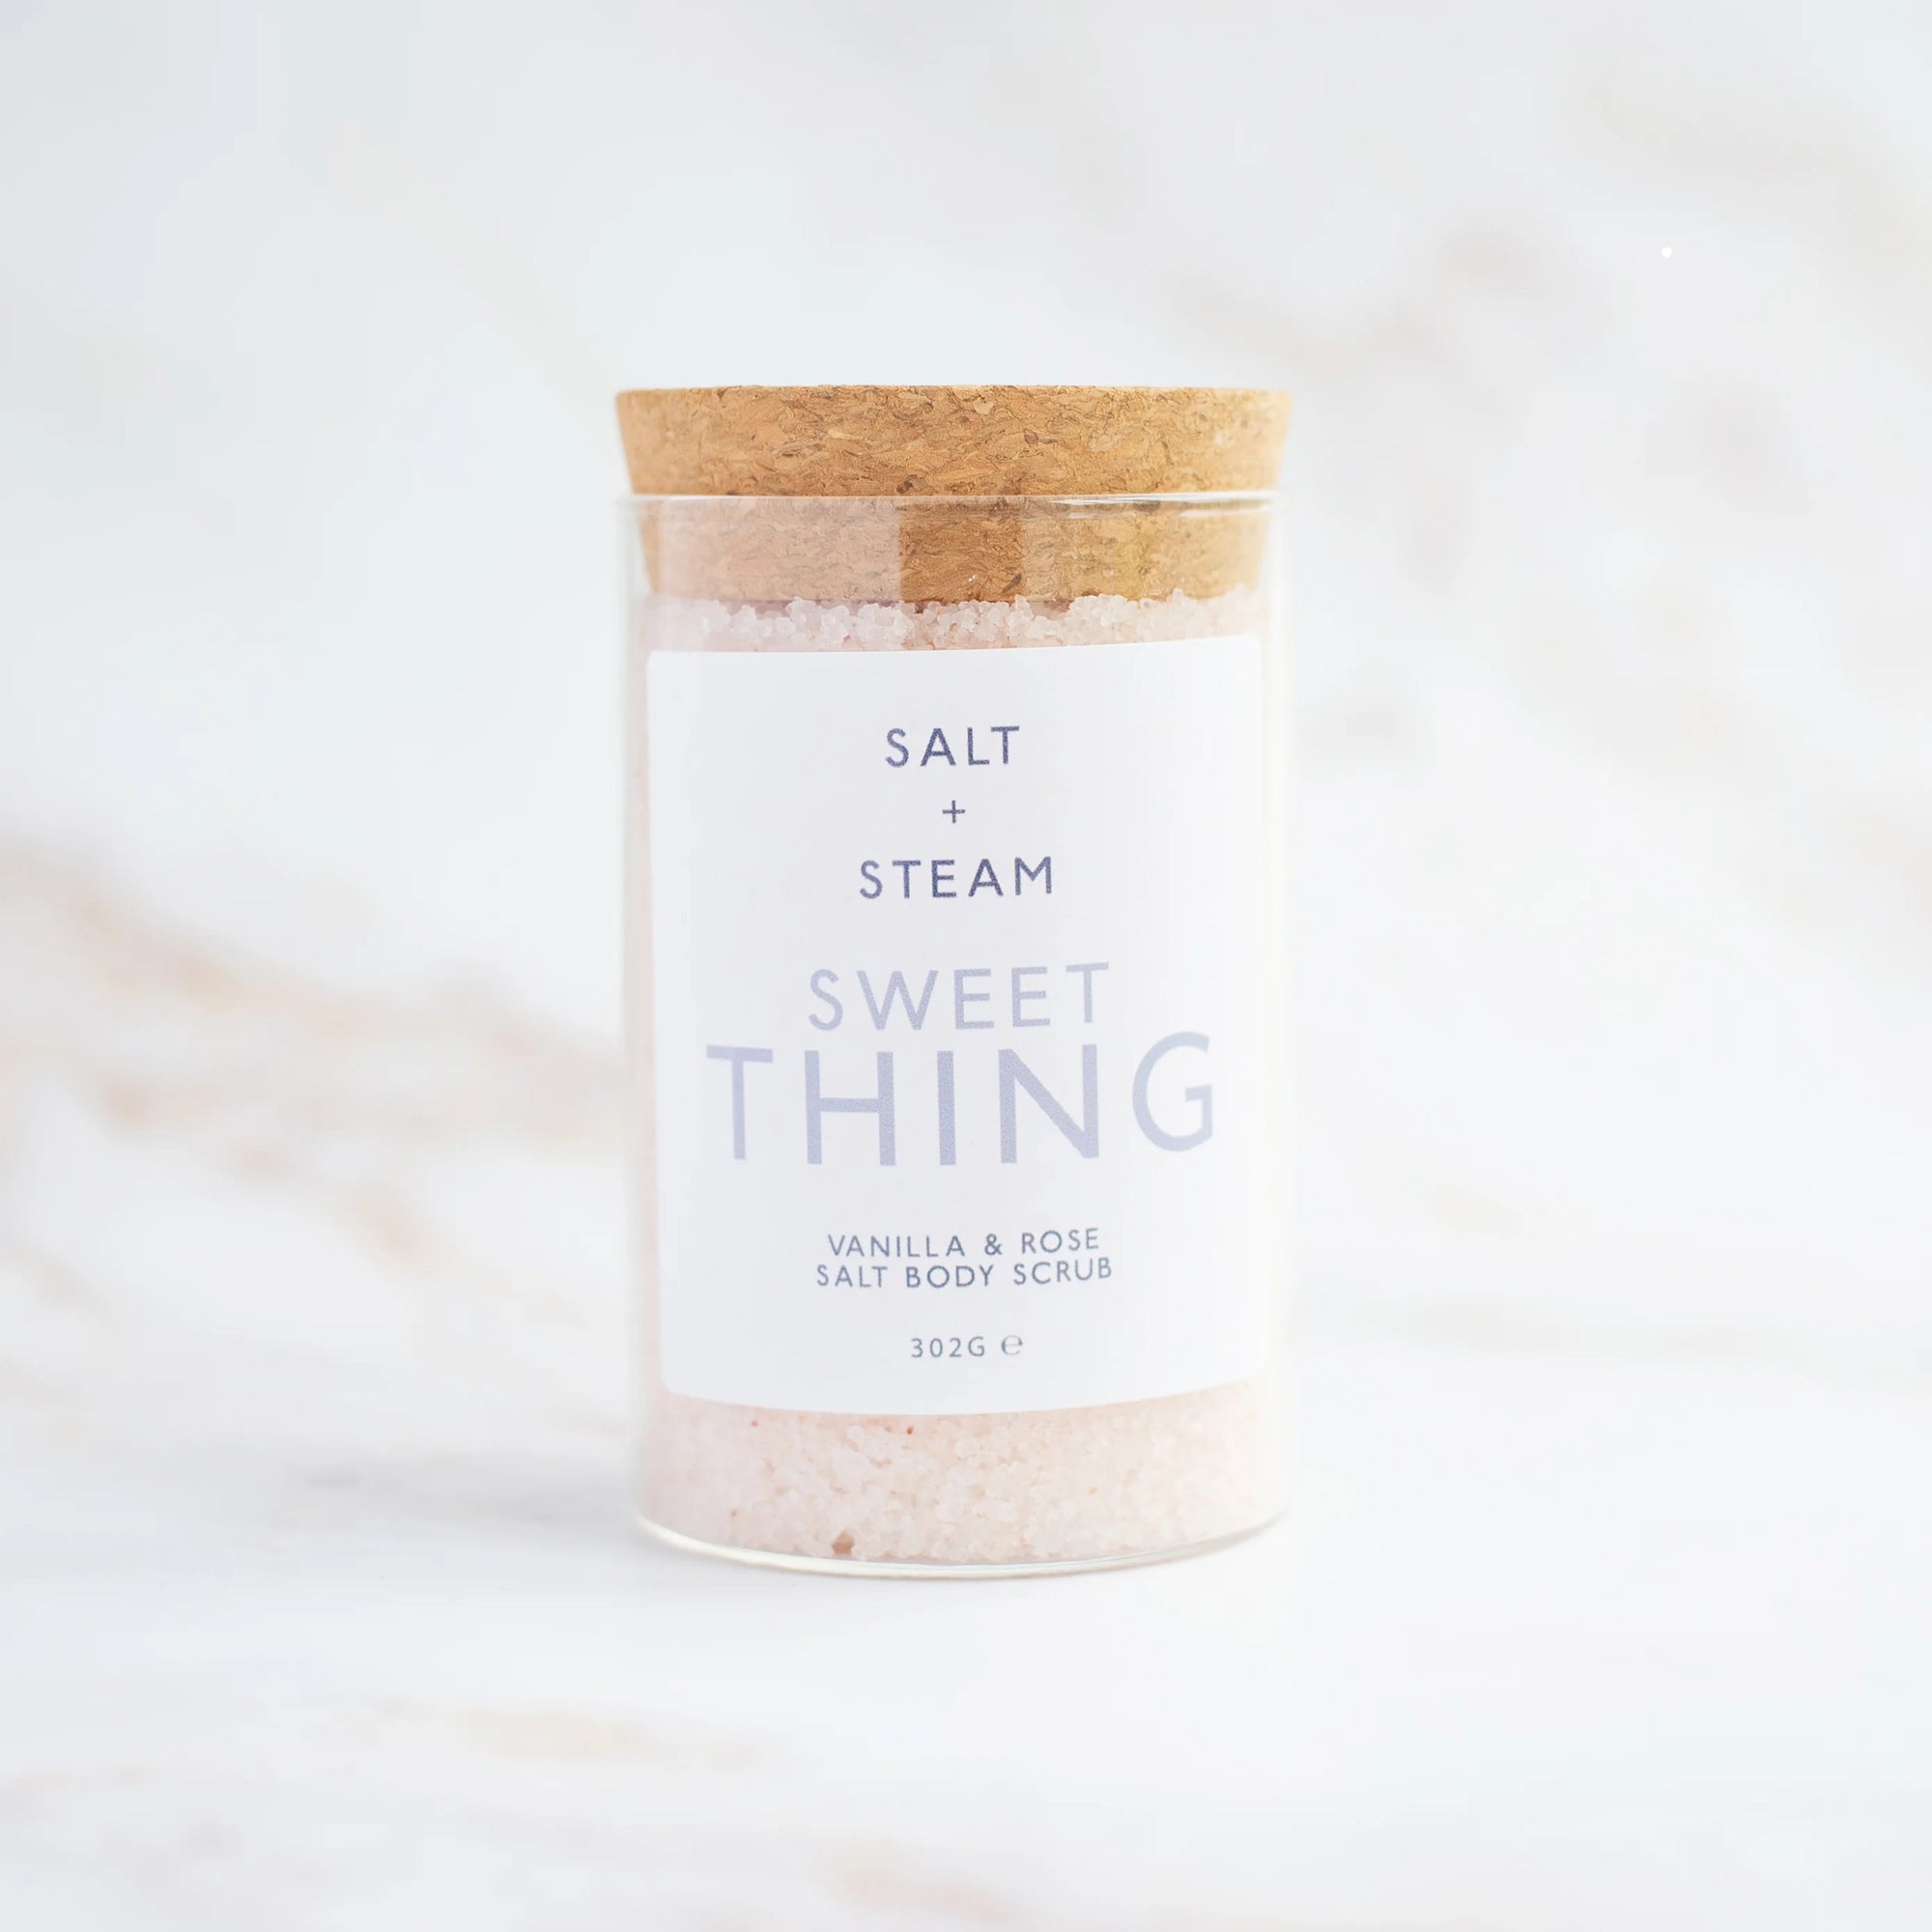 The Sweet Thing Rose Vanilla Body Scrub by Salt + Steam